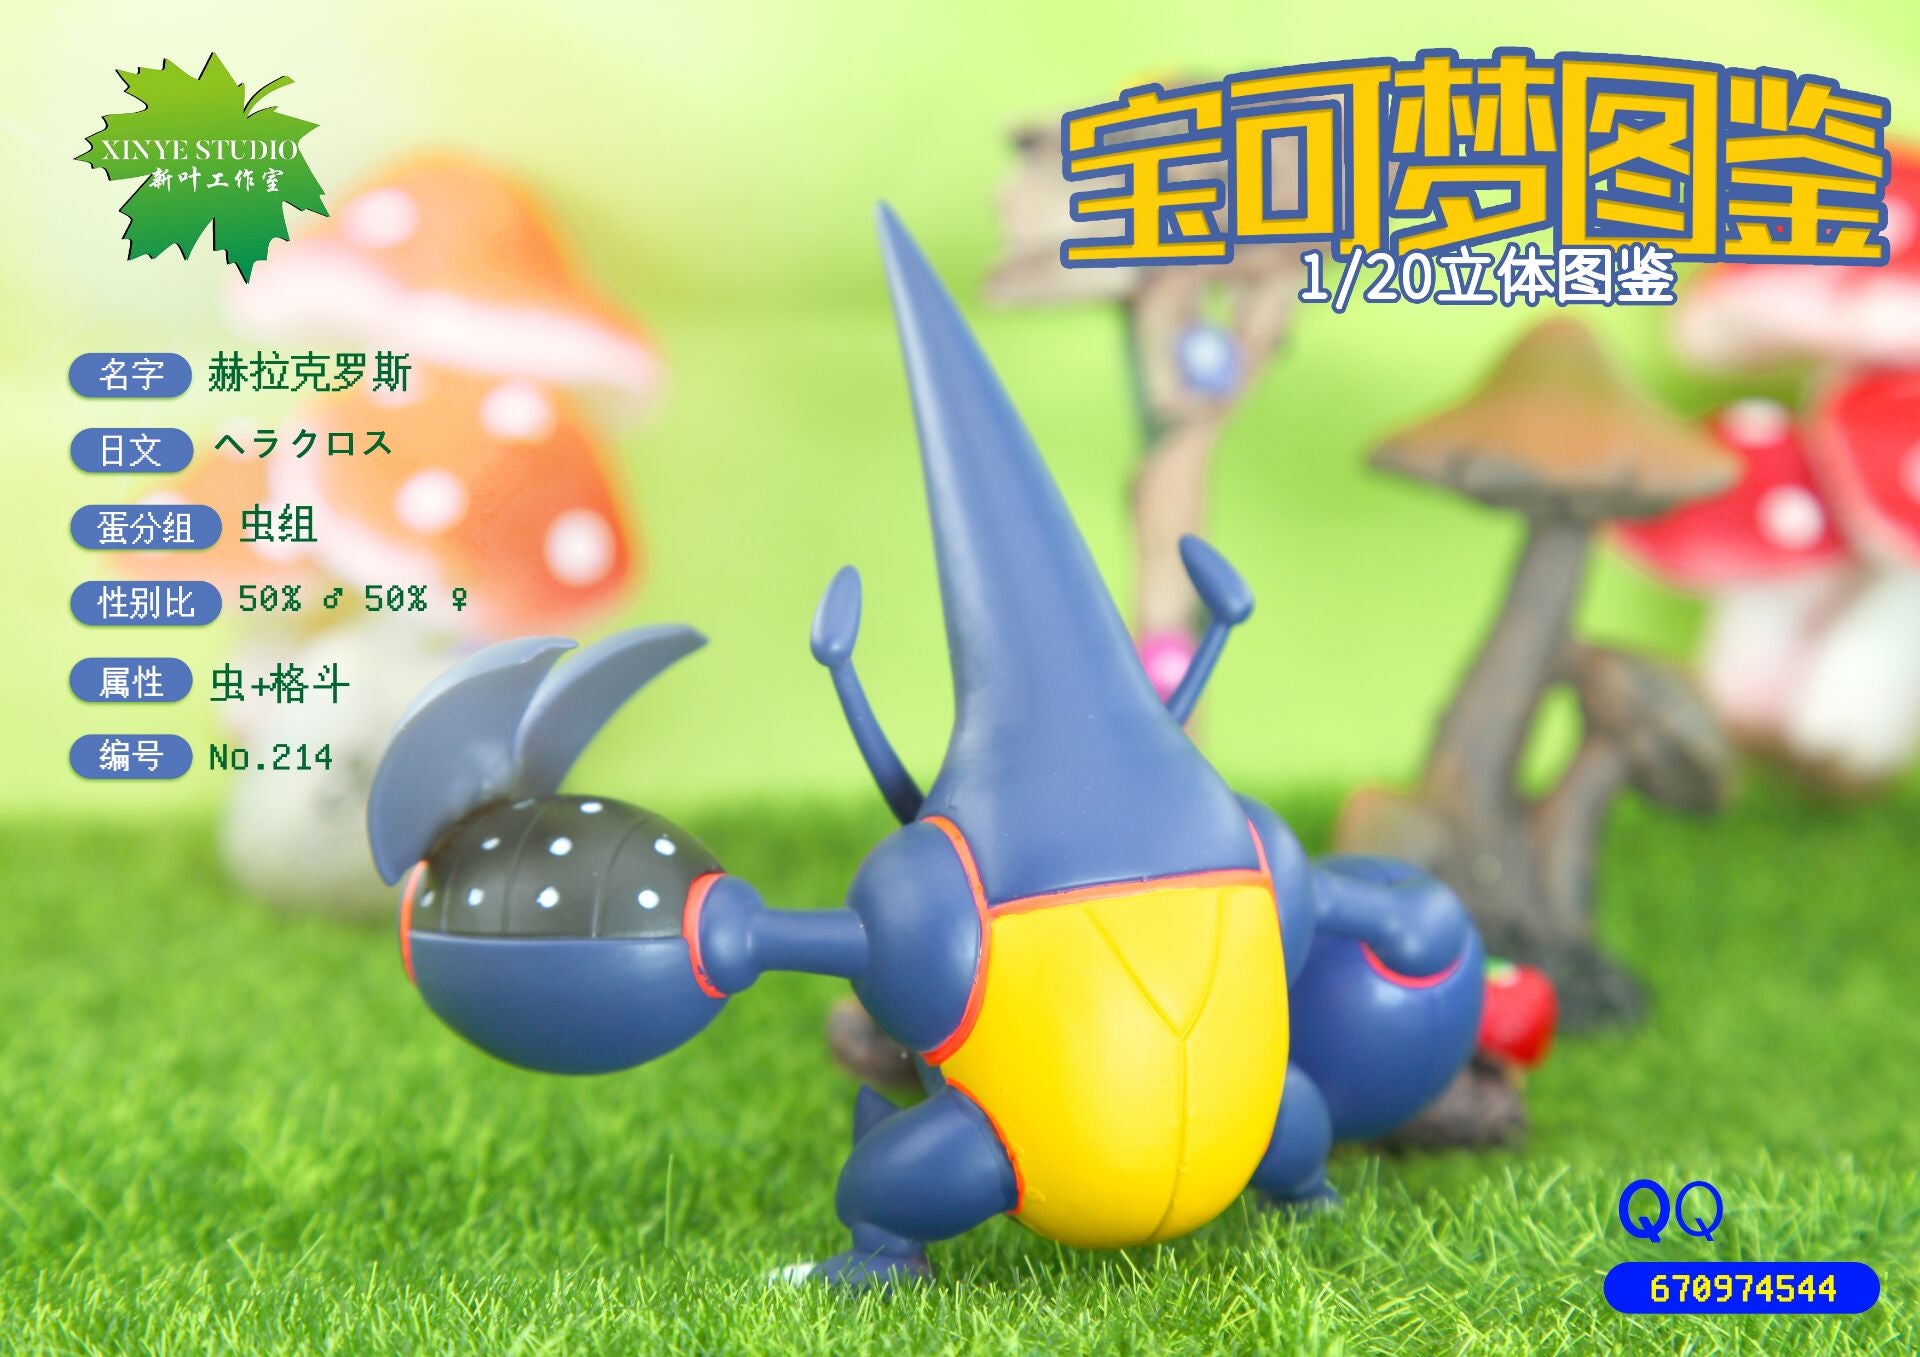 1/20 & 1/8 Scale World Zukan Pokemon XY's Characters - Pokemon Statue - STS  Studio [In Stock]